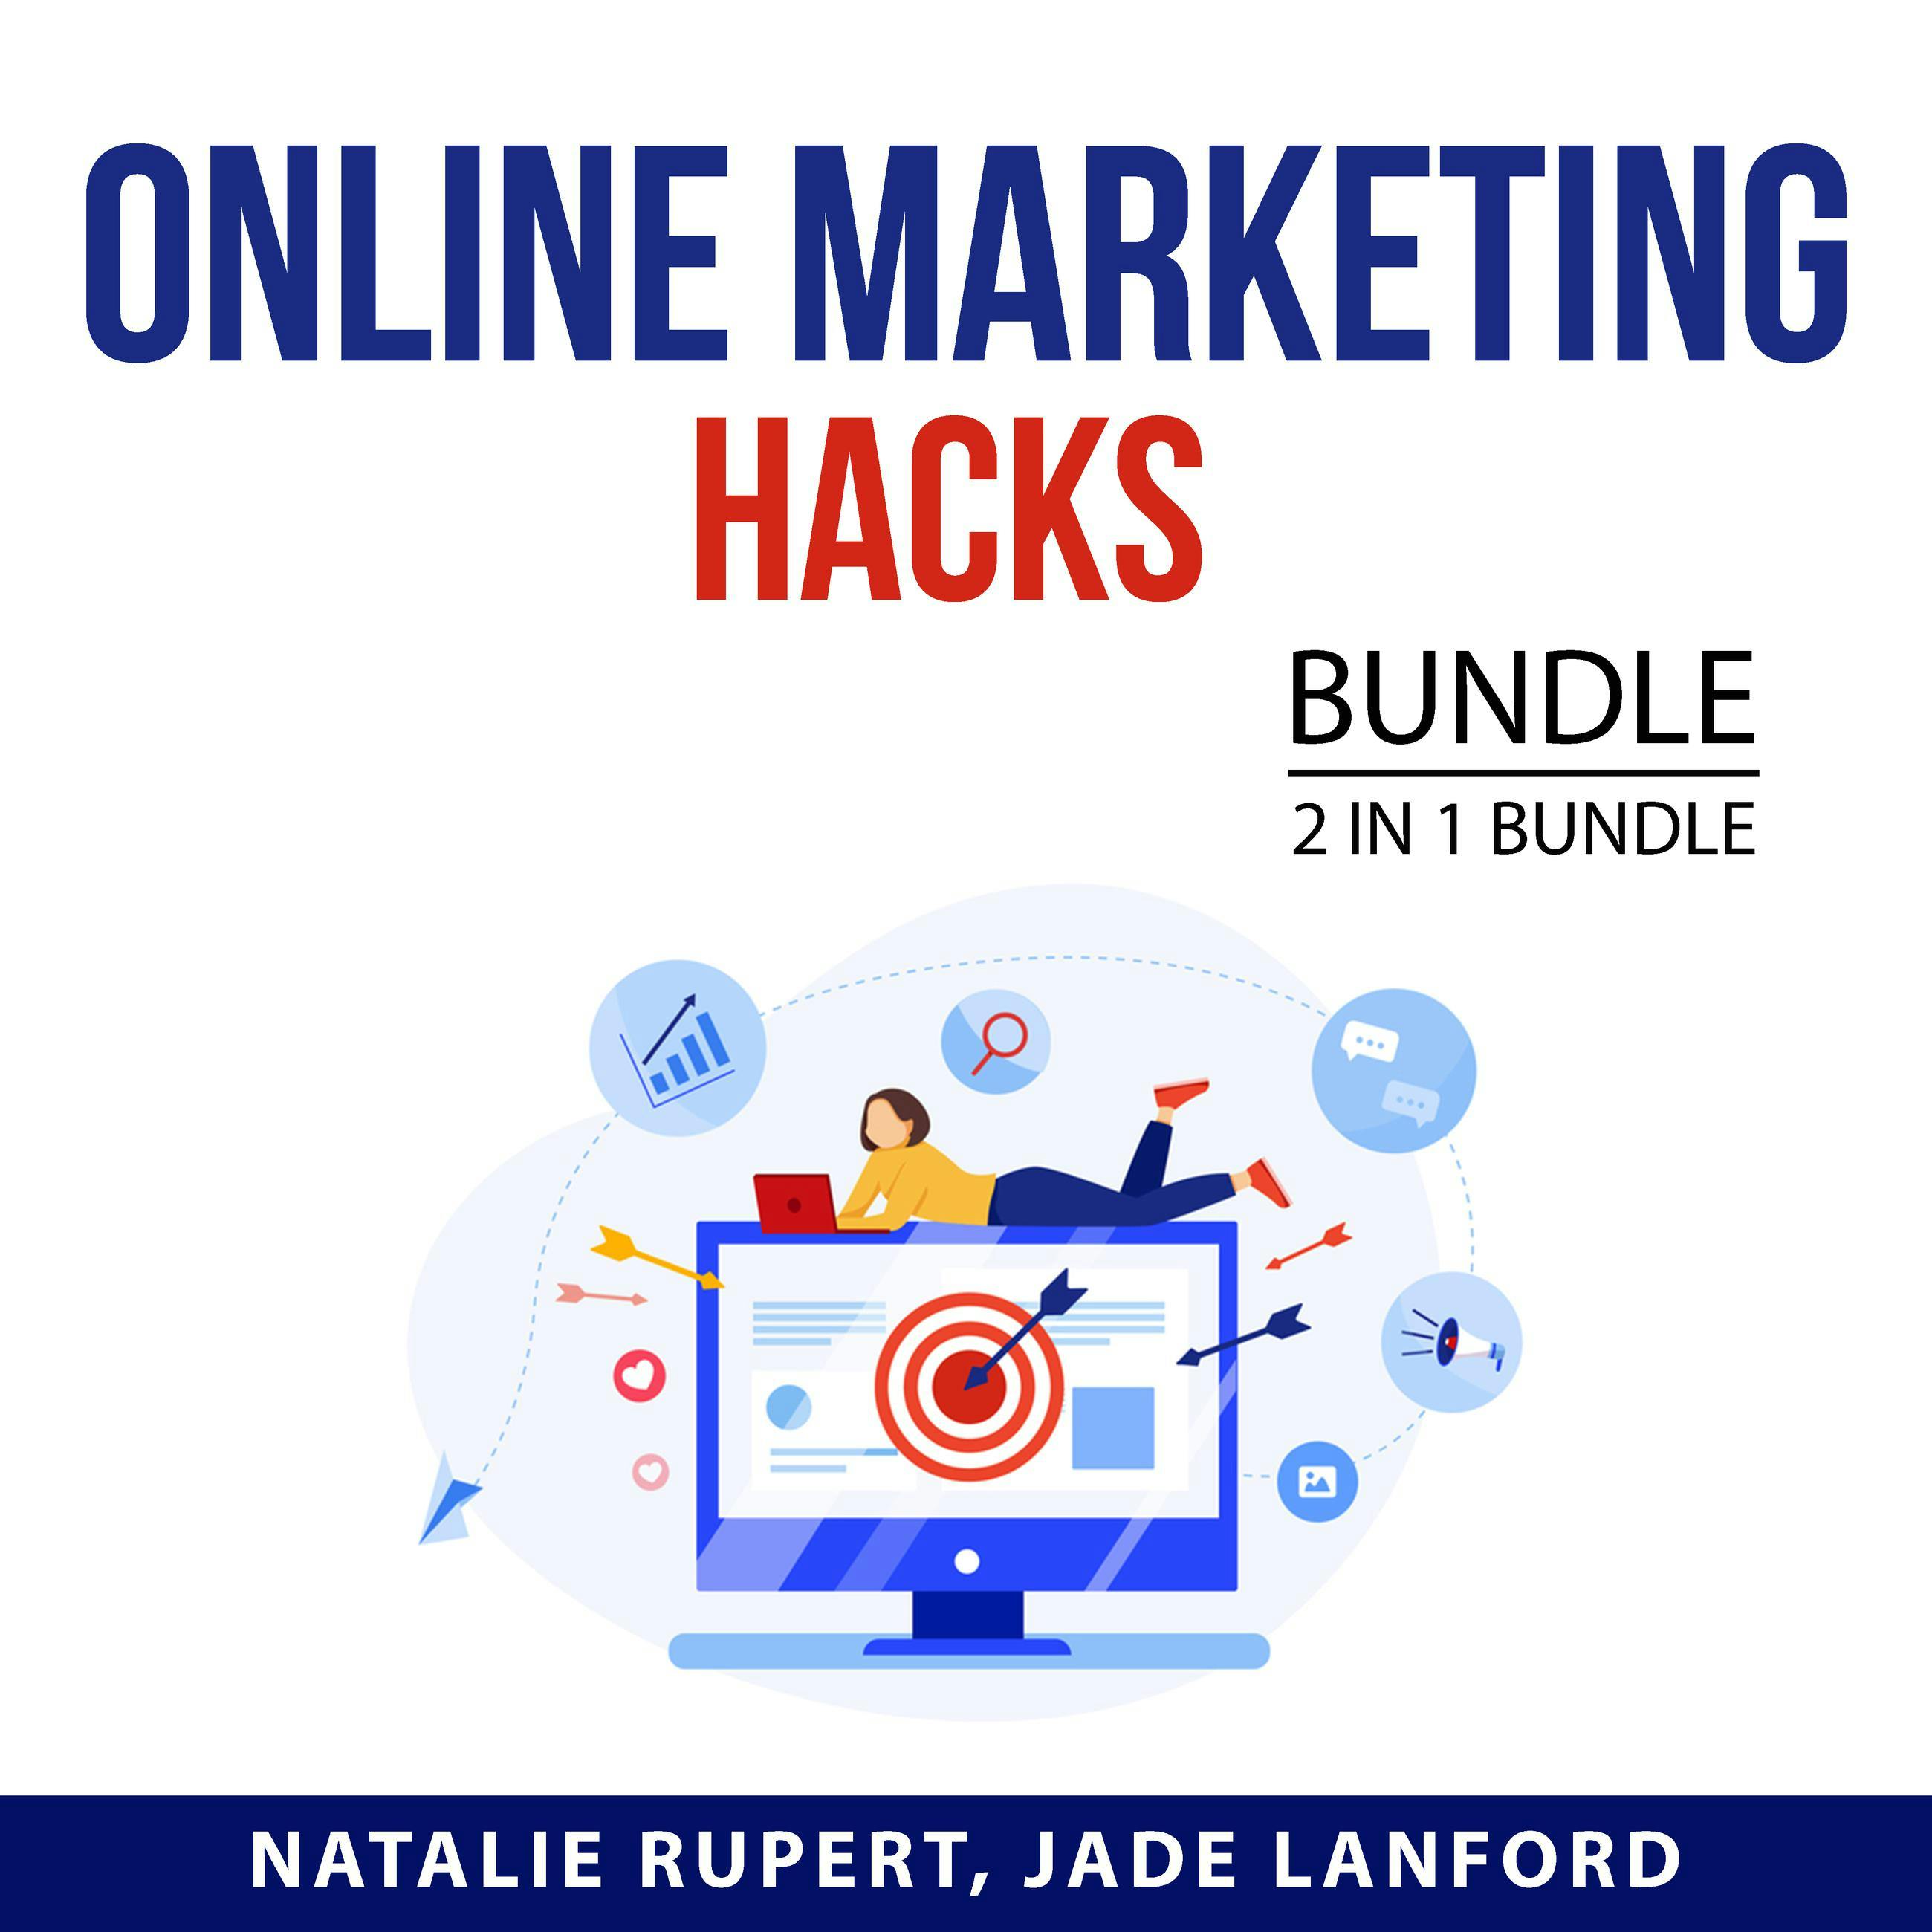 Online Marketing Hacks Bundle, 2 in 1 Bundle: Online Marketing That Works and Online Marketing Guide - undefined